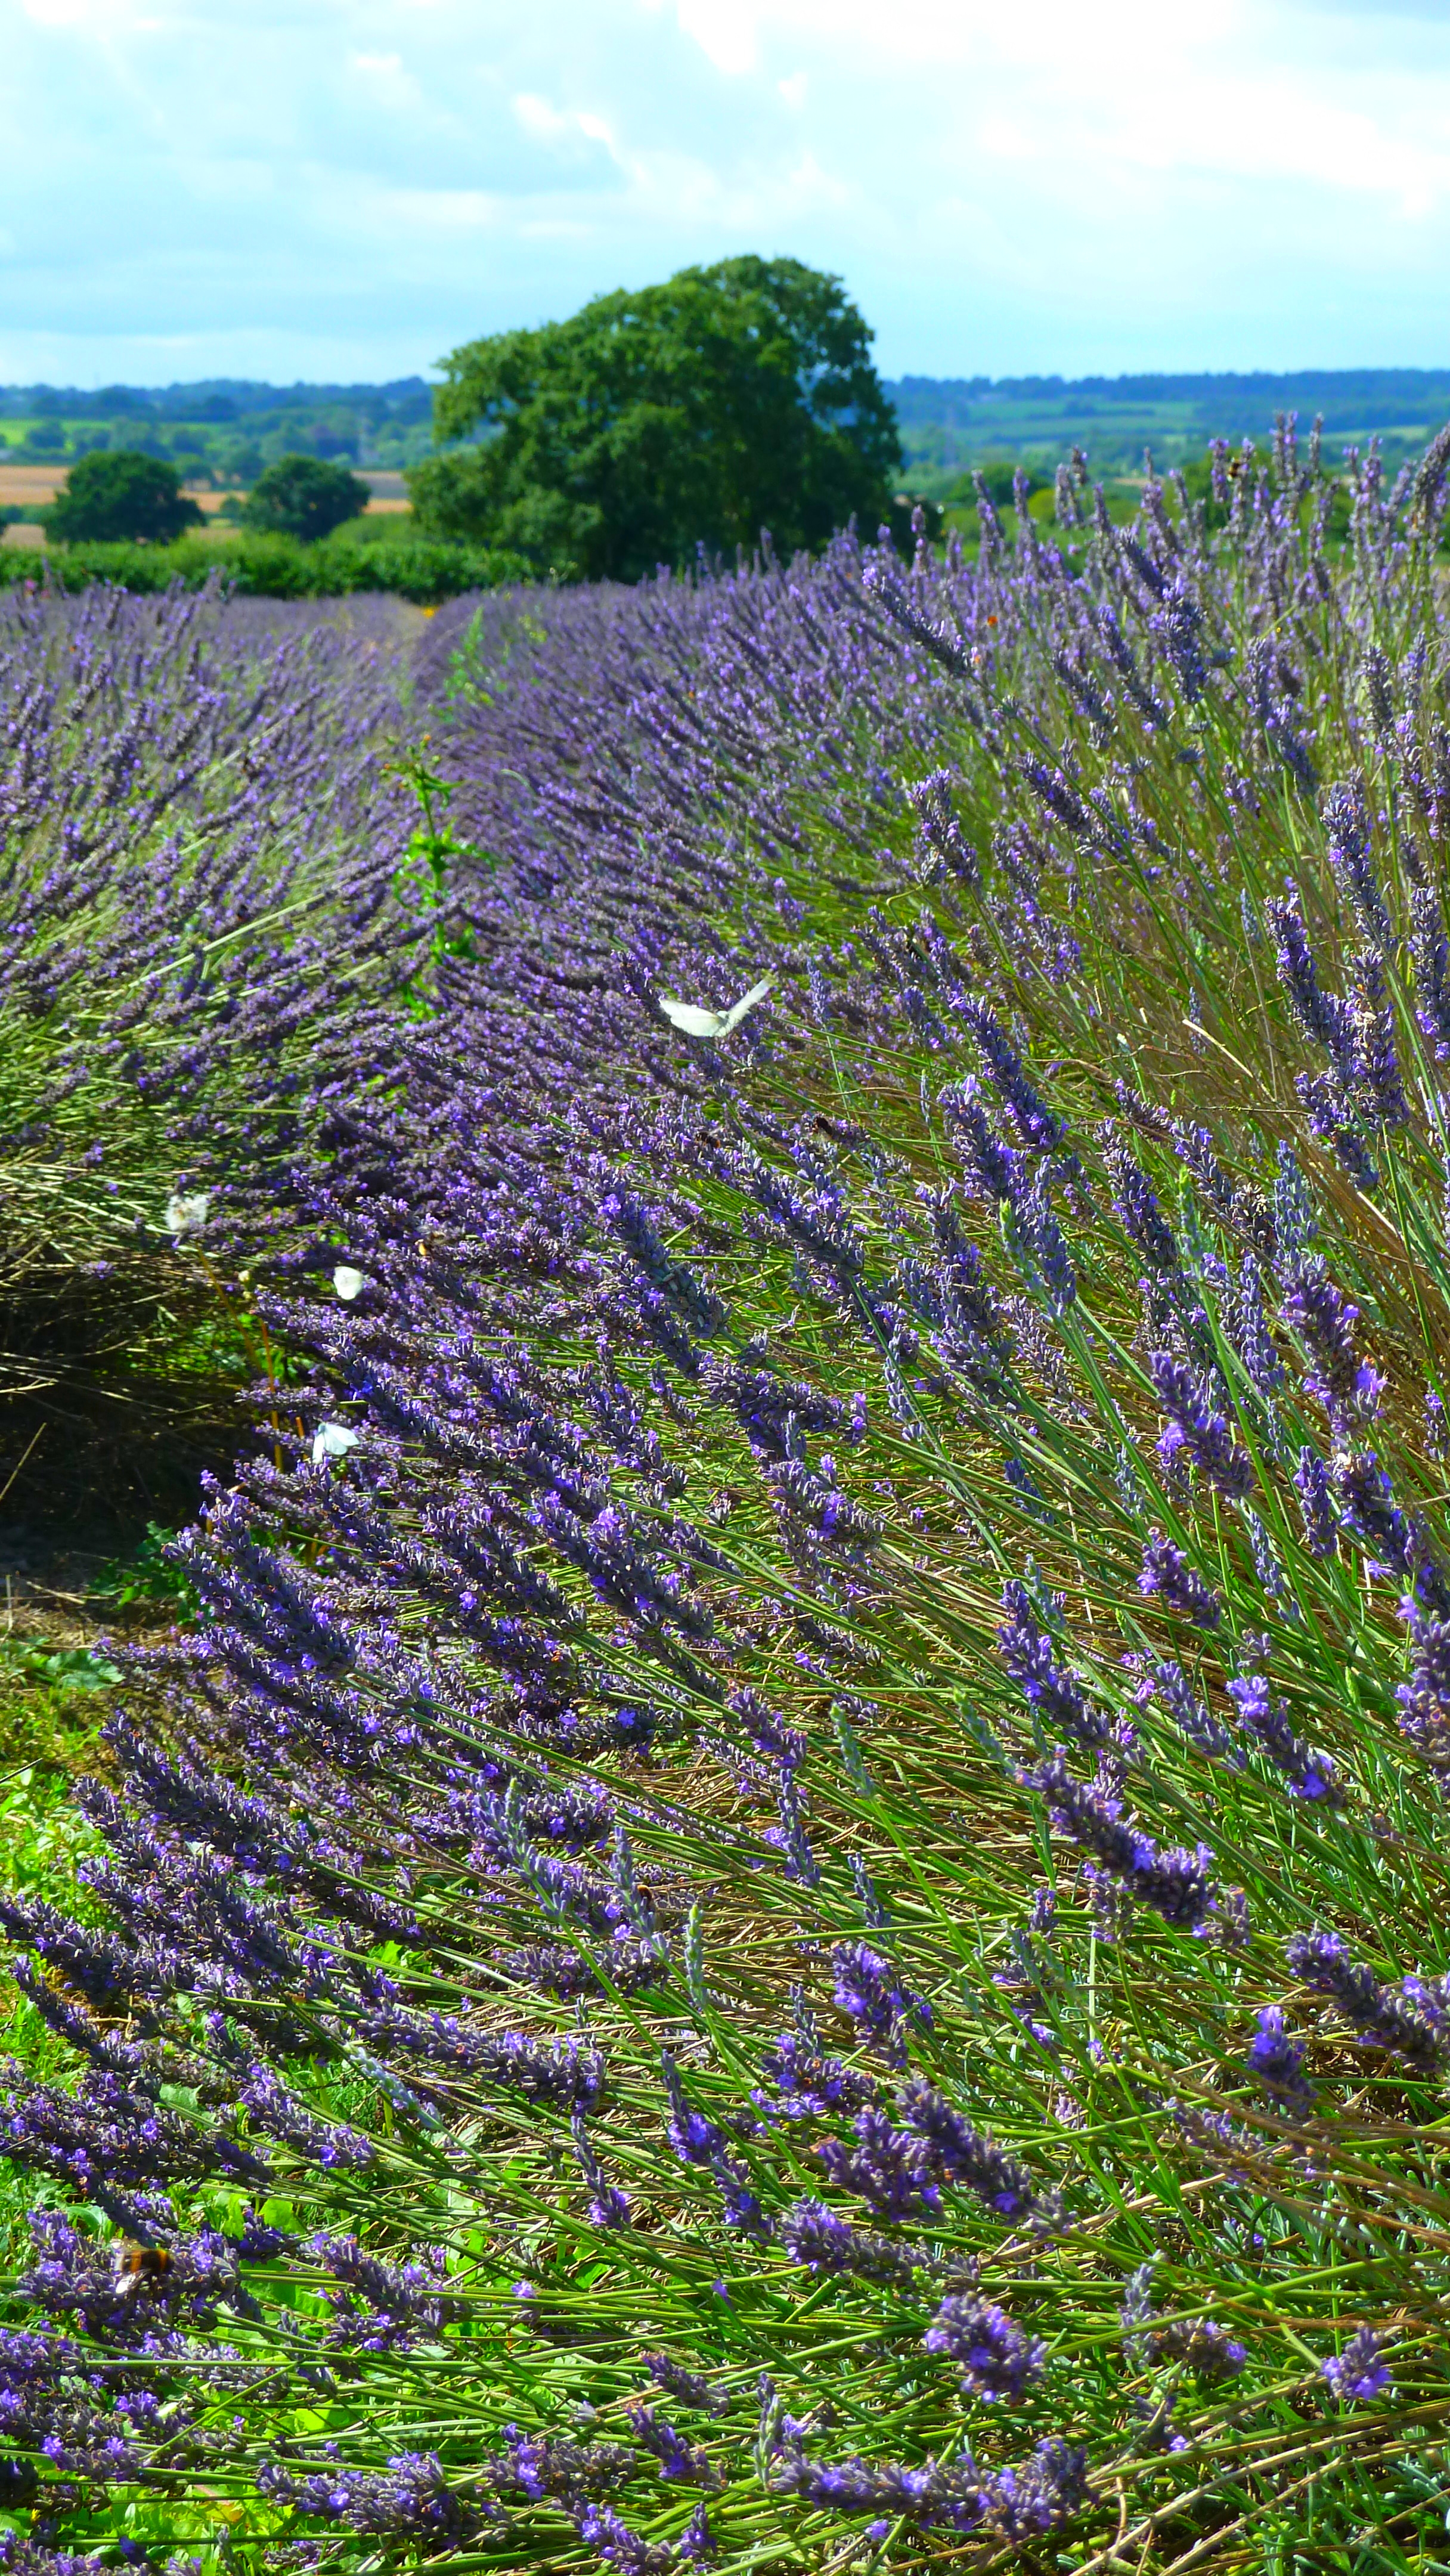 The lavender field photo